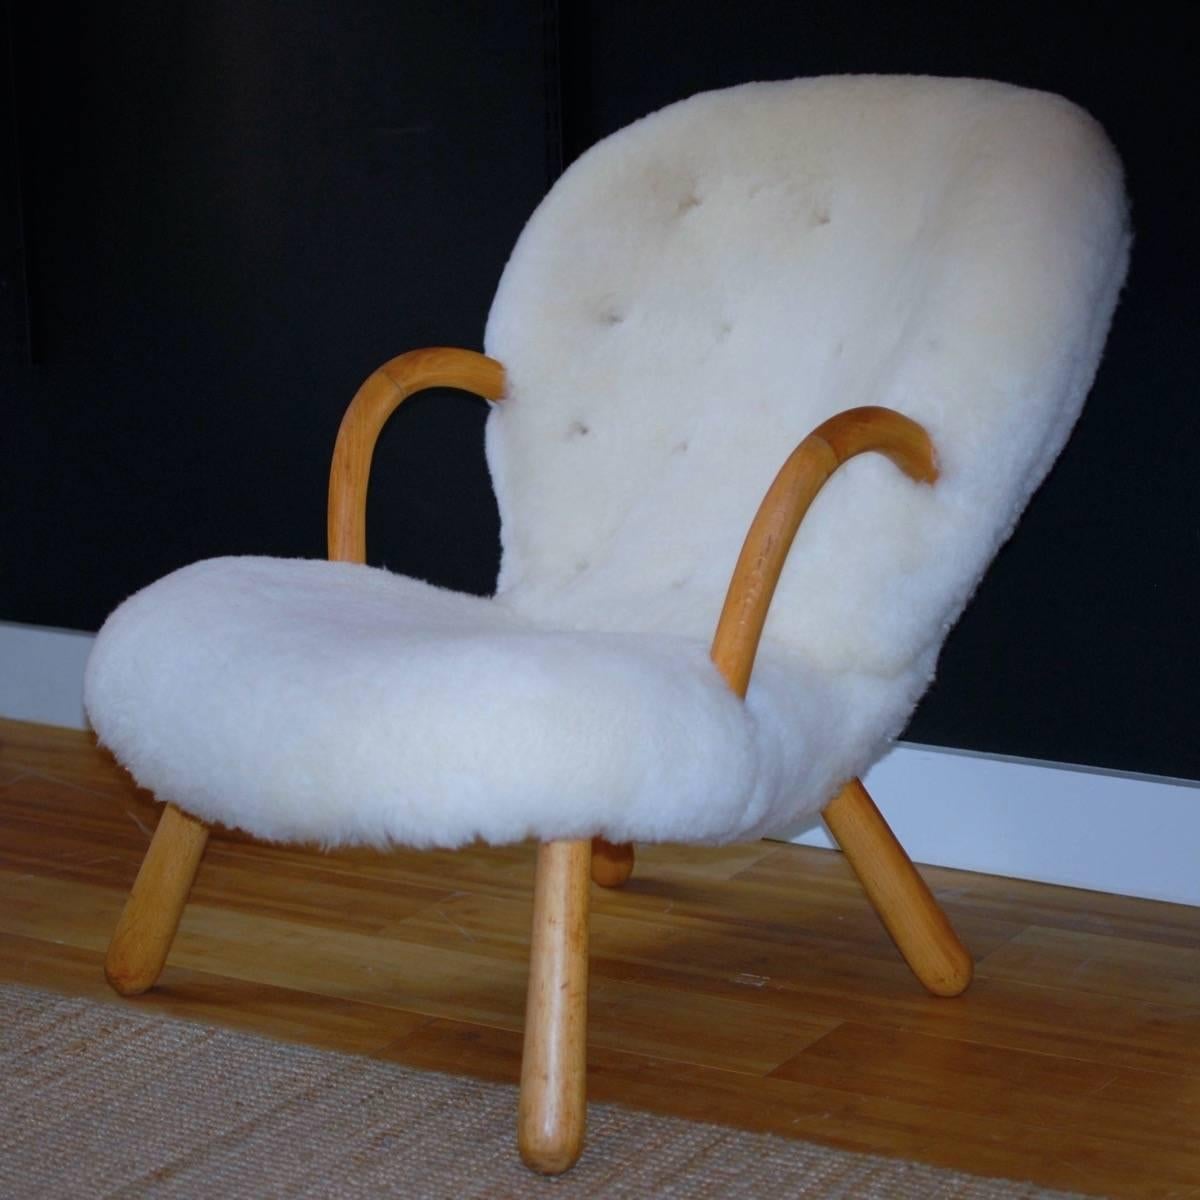 Classic Clam chair 

Philip Arctander sheepskin Clam chair Vik & Blindheim, Norway Scandinavia 

Beech legs, tann leather buttons, Norwegian Sheepskin upholstery. 

Top stand.